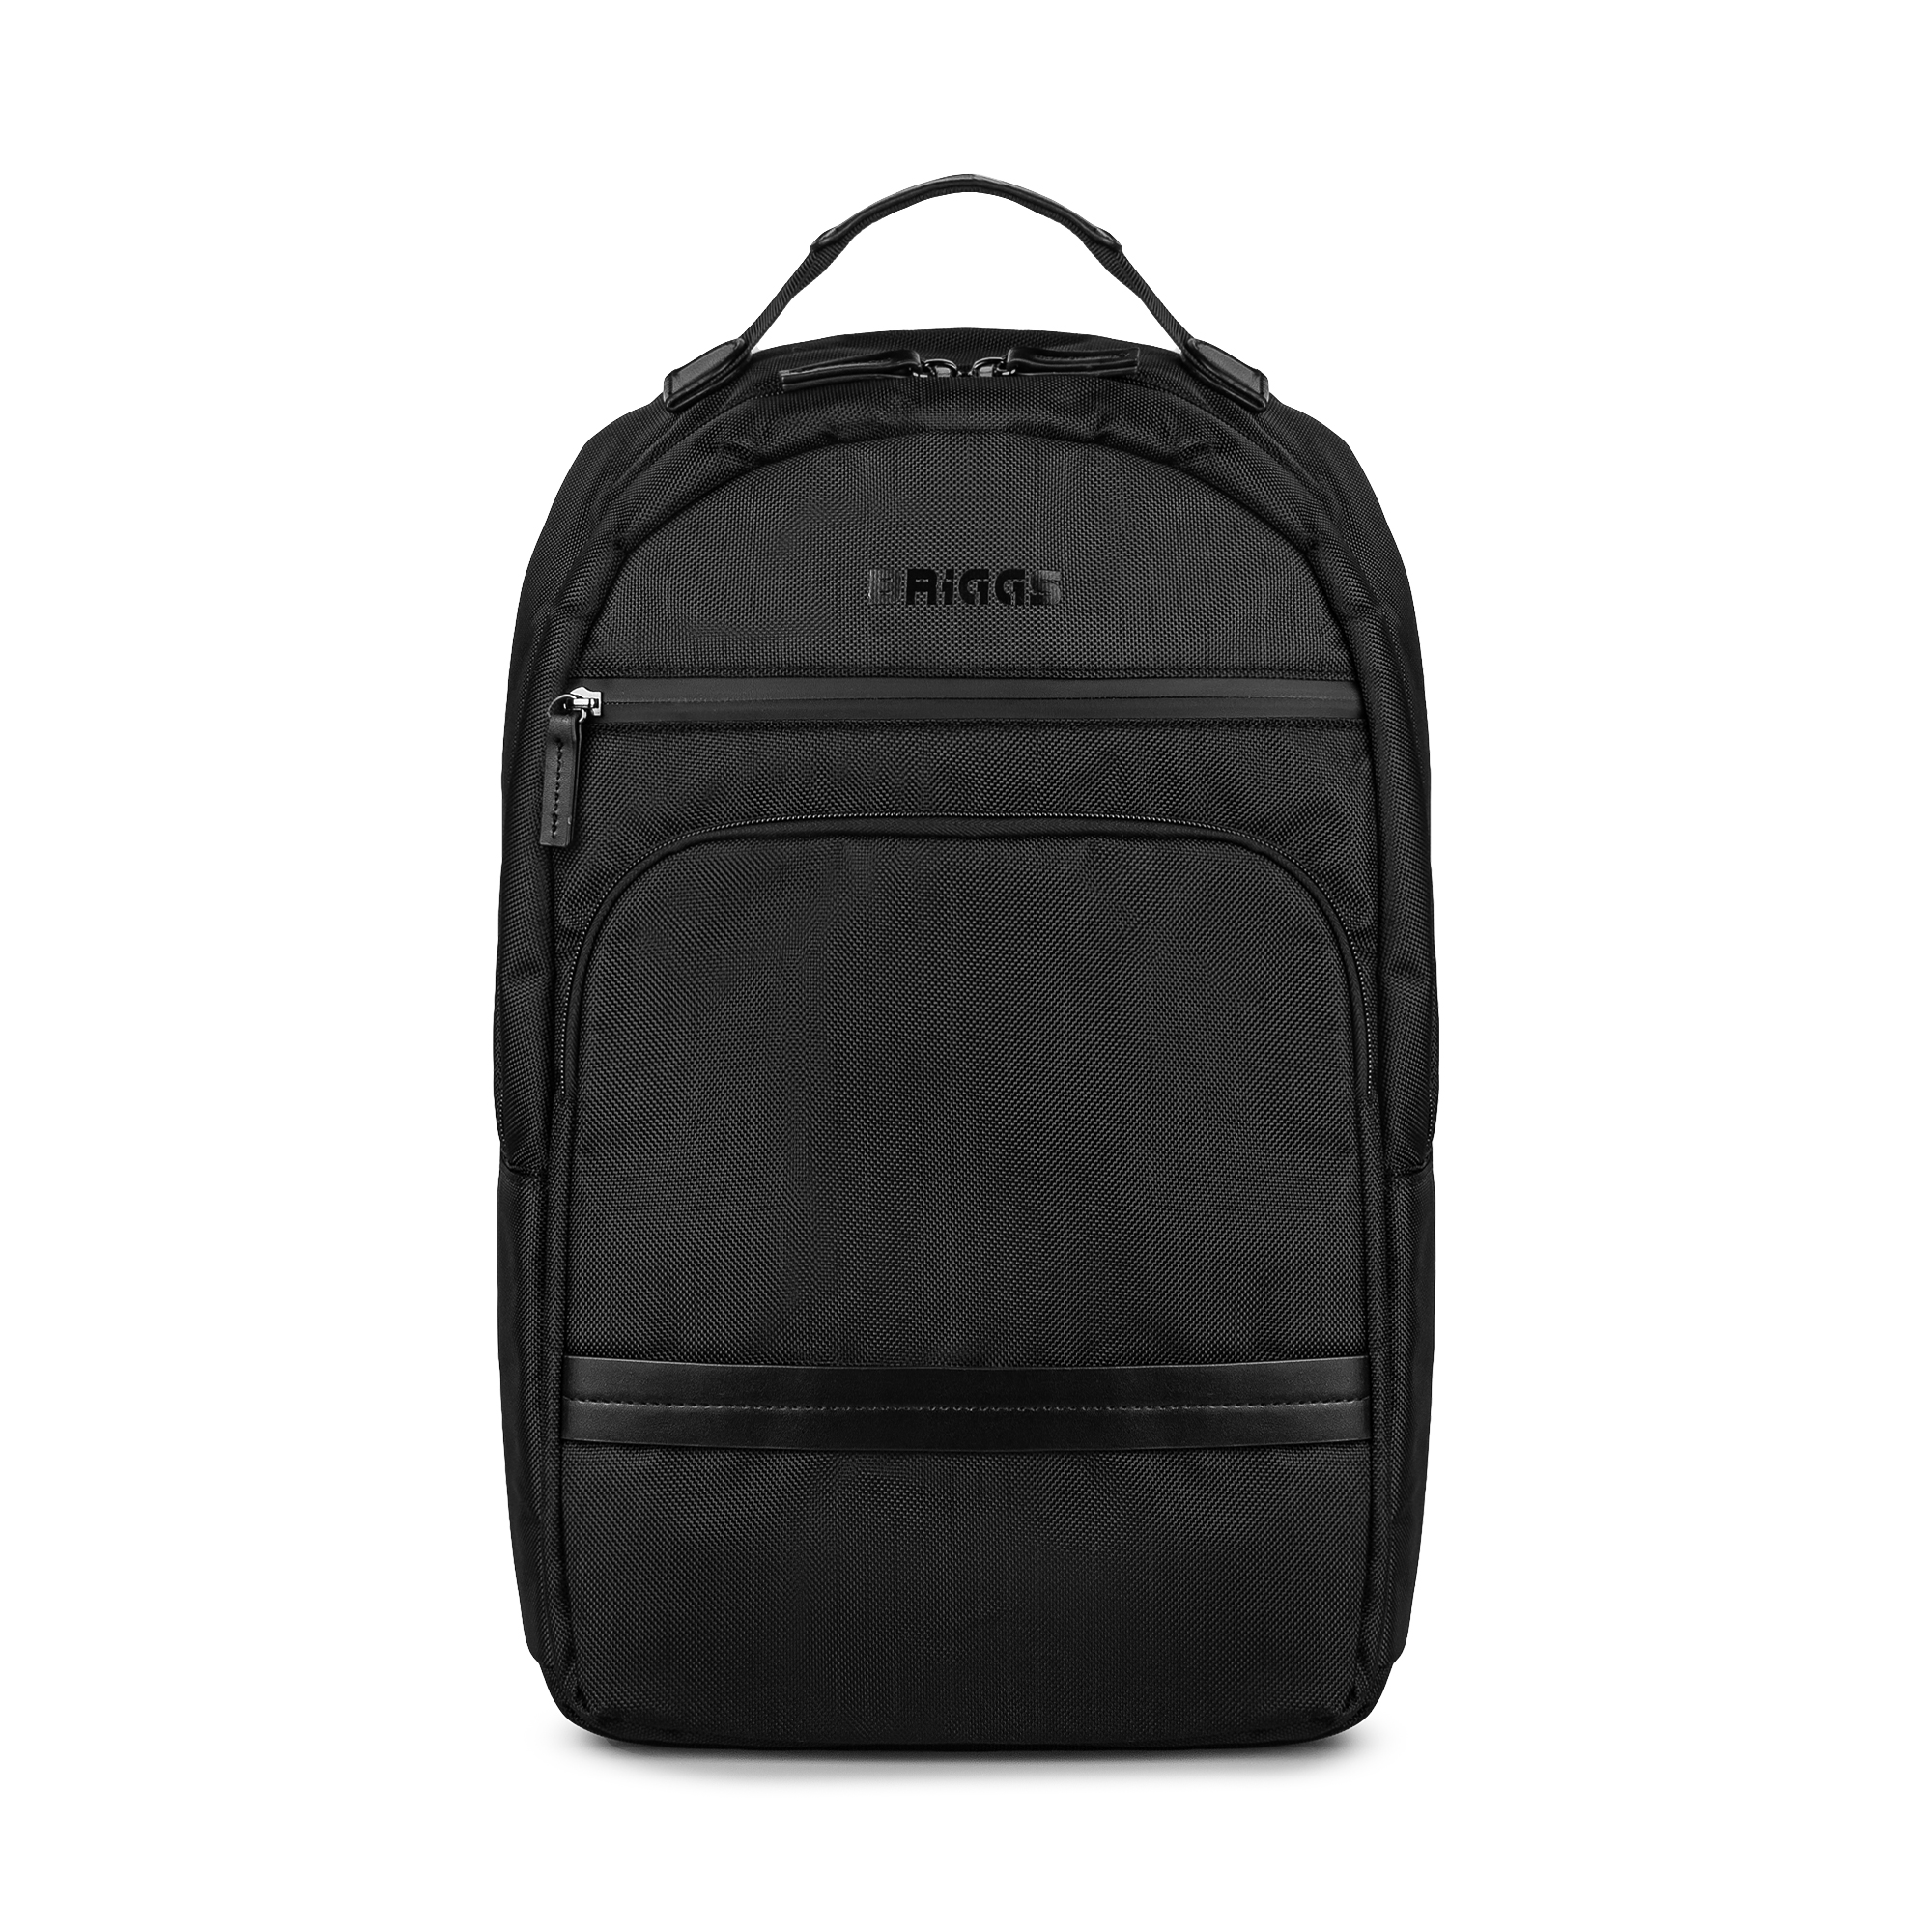 Рюкзак BRIGGS 665-22L-2402, цвет черный, размер ONE SIZE - фото 1